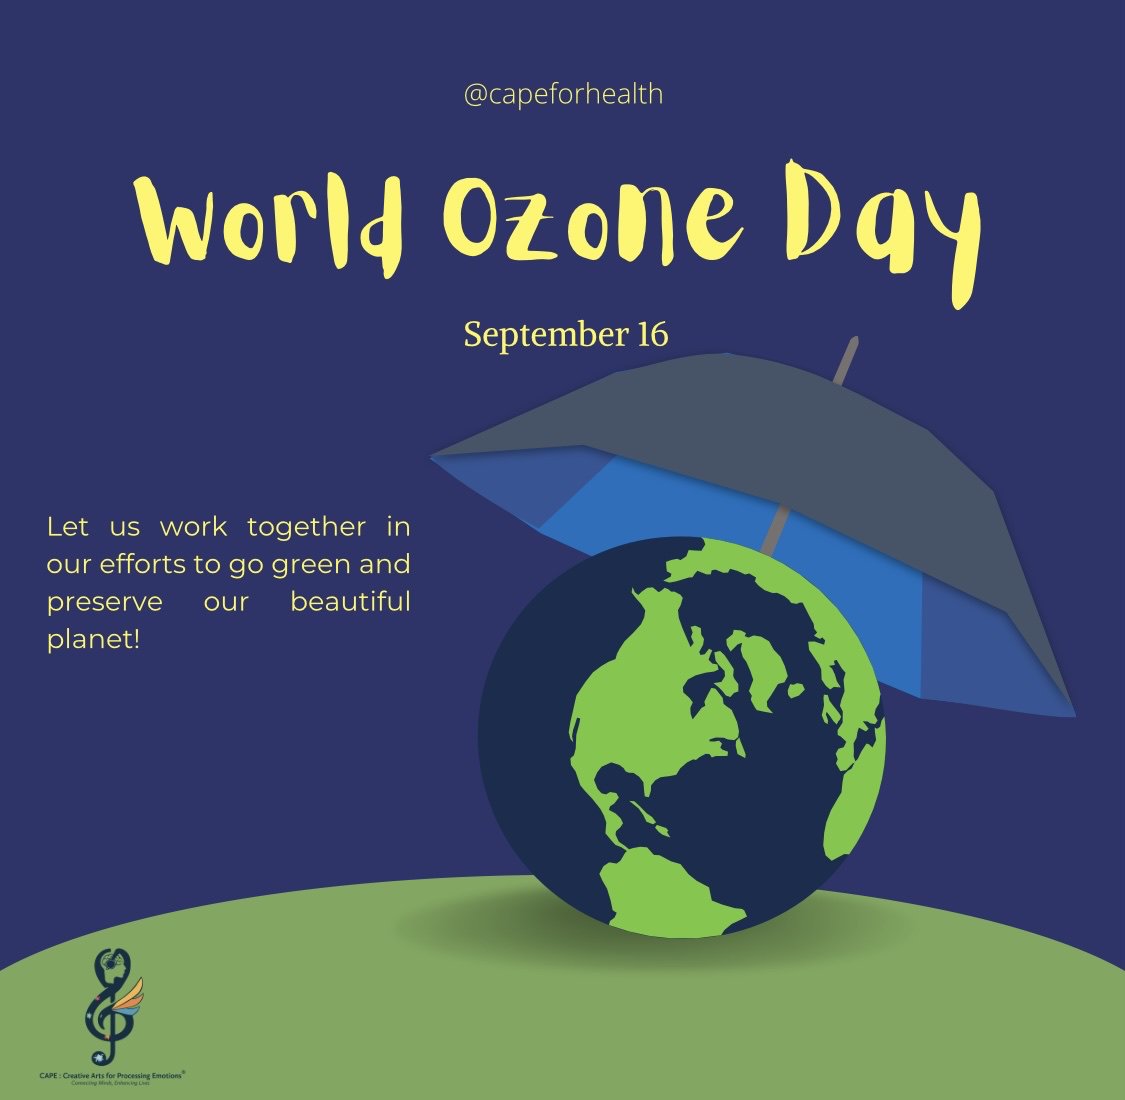 Happy world ozone day! #mentalhealth #ozone #environment #savetheplanet #gogreen #capeforhealth #cape #mentalhealthawareness